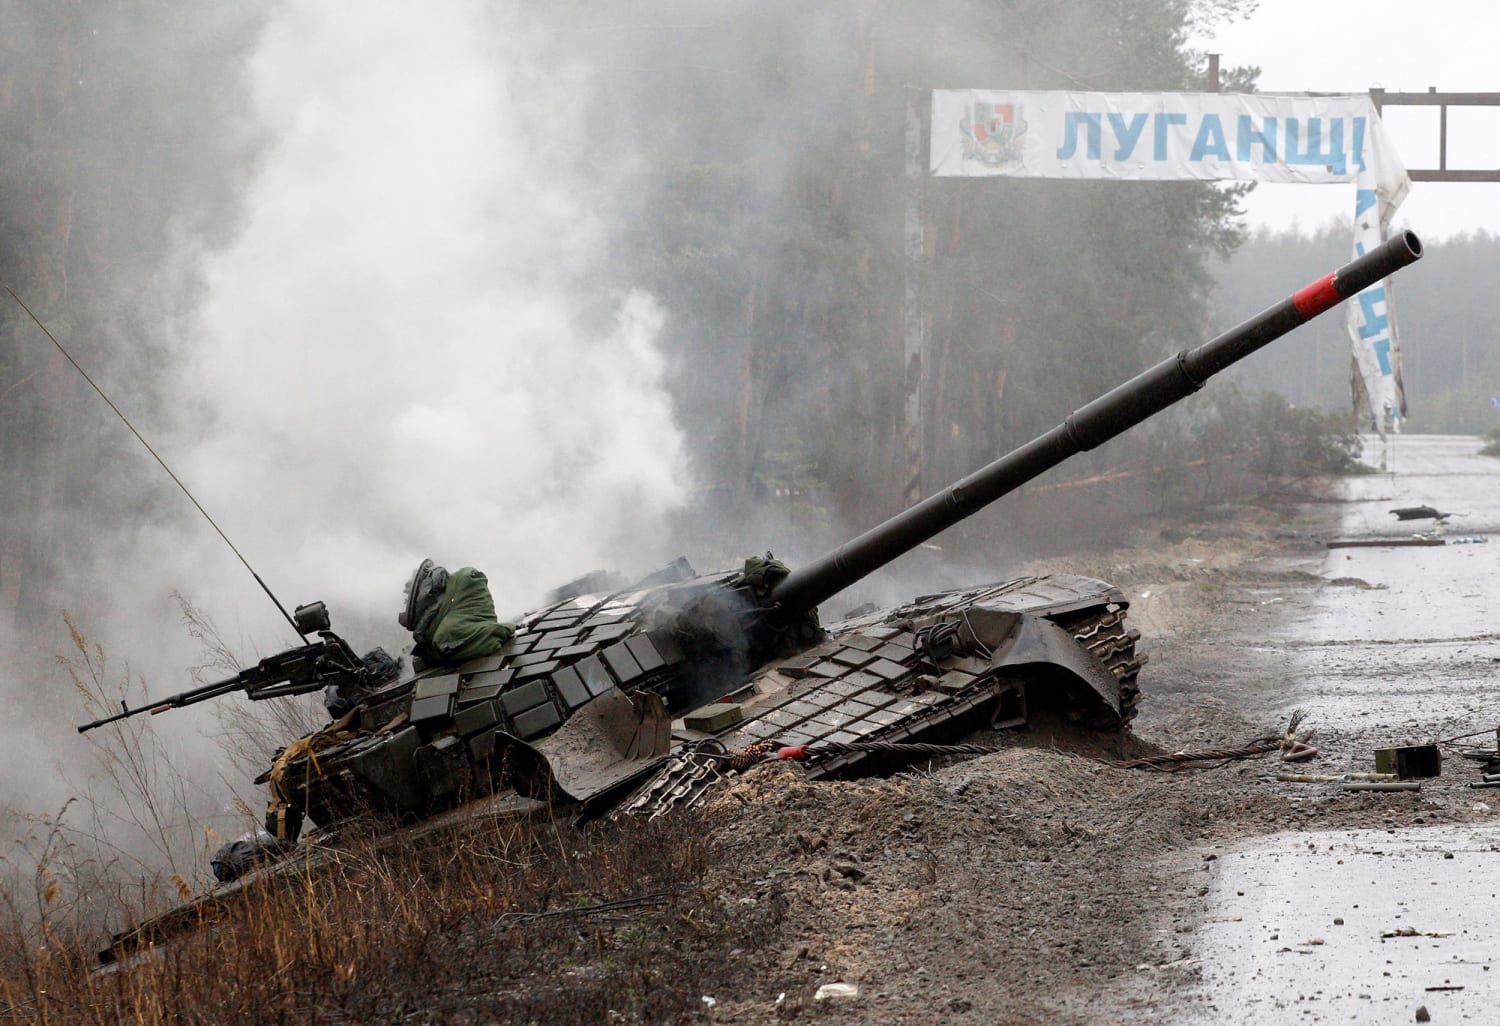 Ukrainian Man Calls Russian Tech Support to Help With Captured Tank: Report